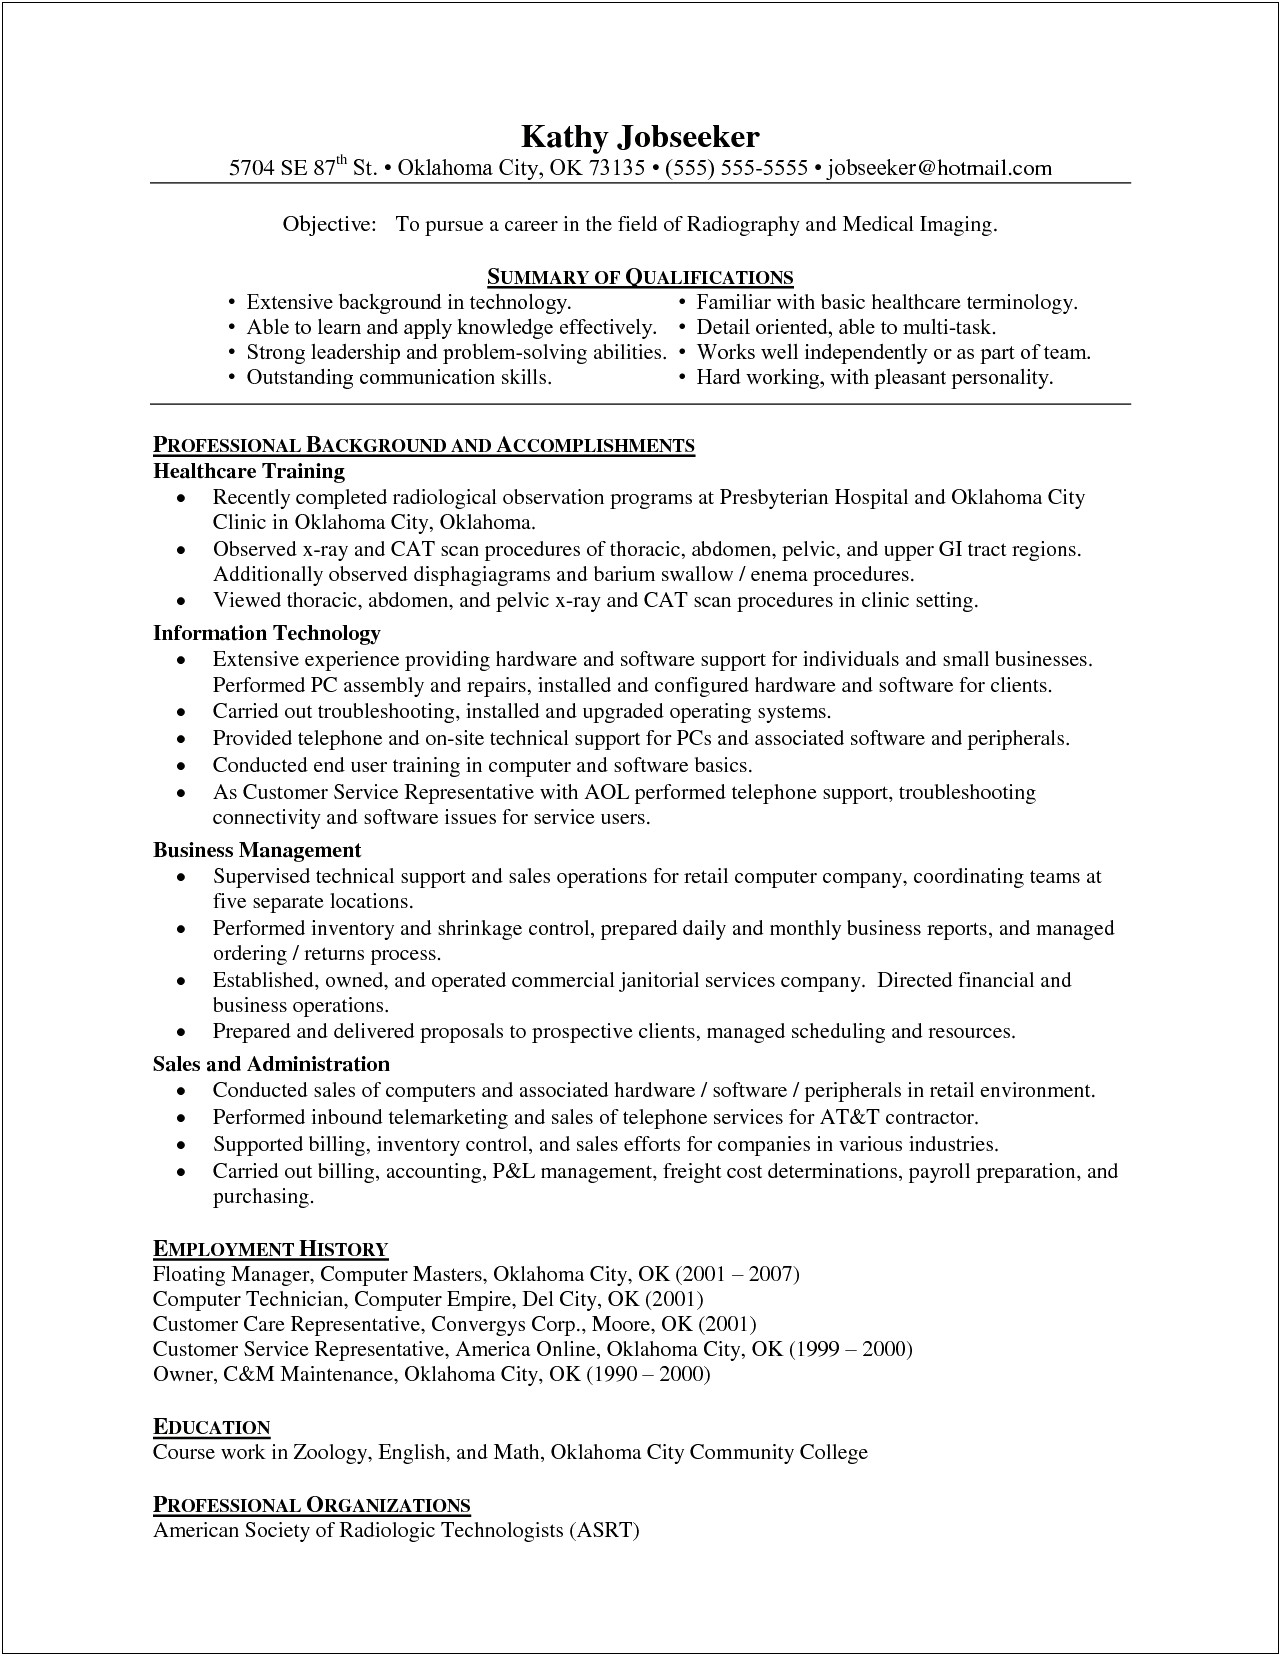 Resume Profile Summary Of Radiologic Technologist